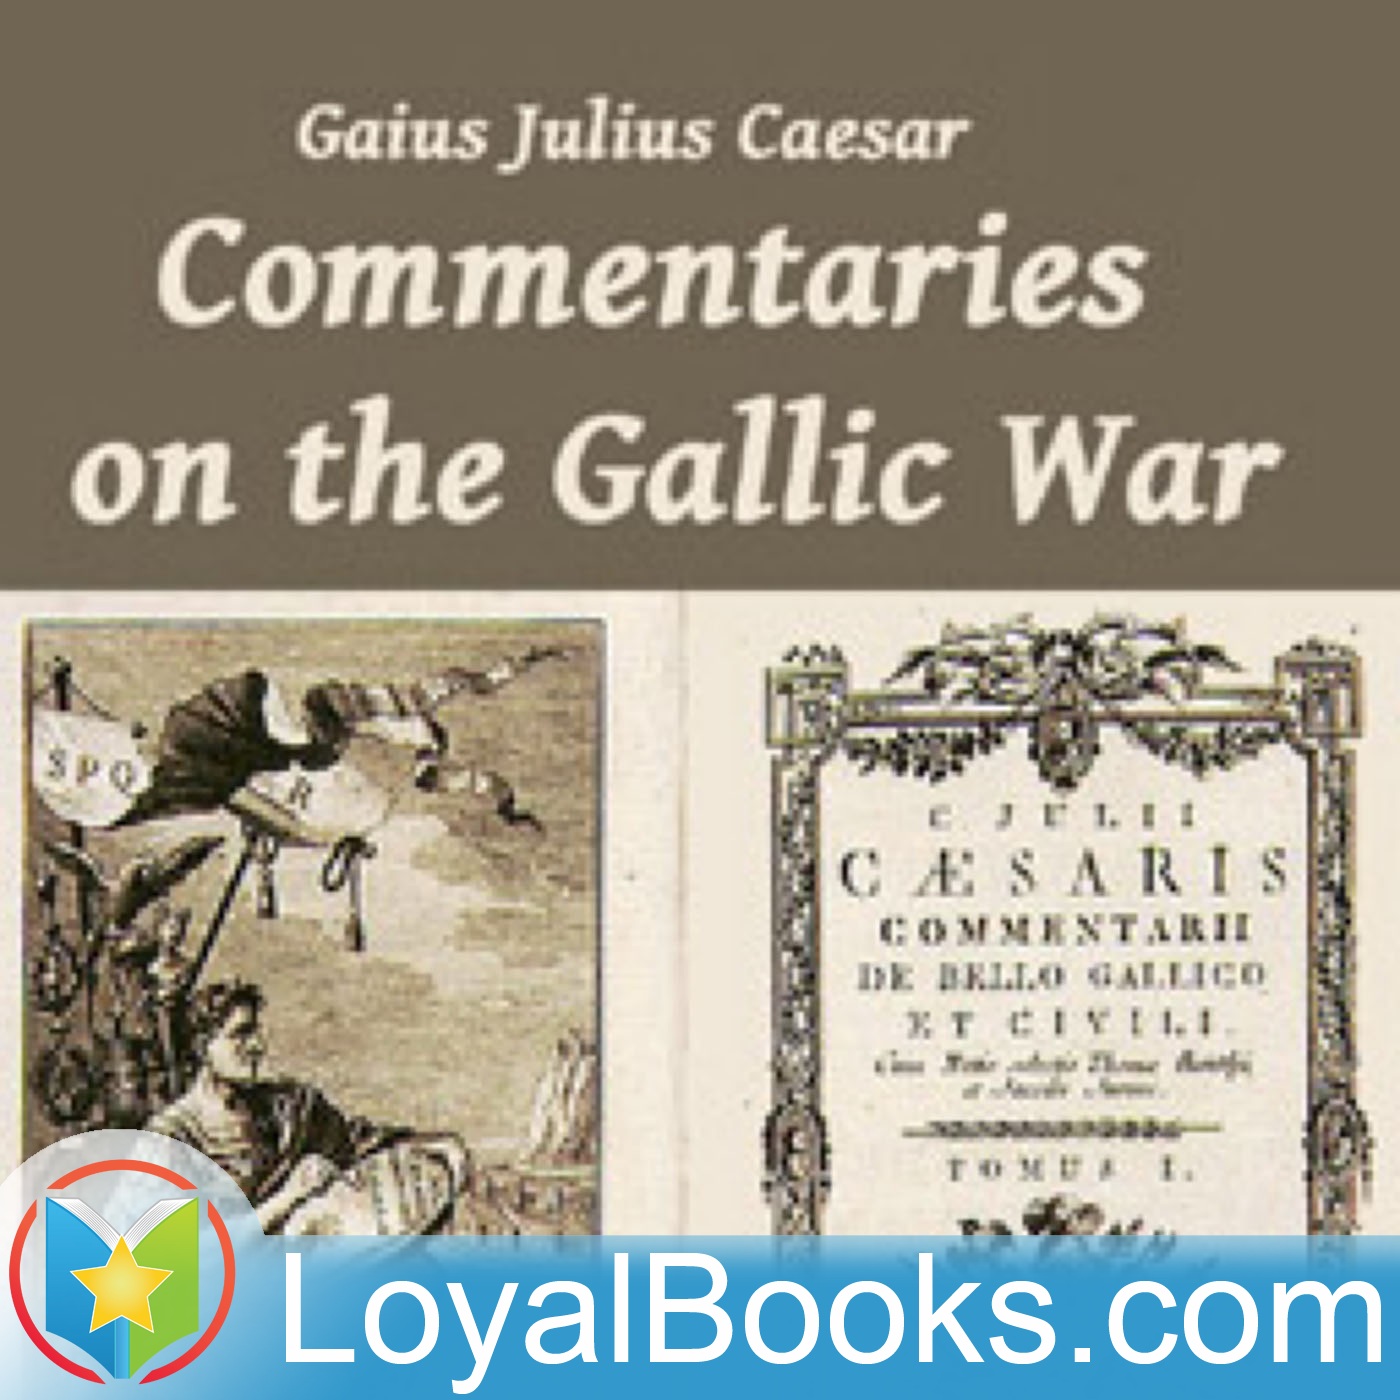 Commentaries on the Gallic War by Gaius Julius Caesar